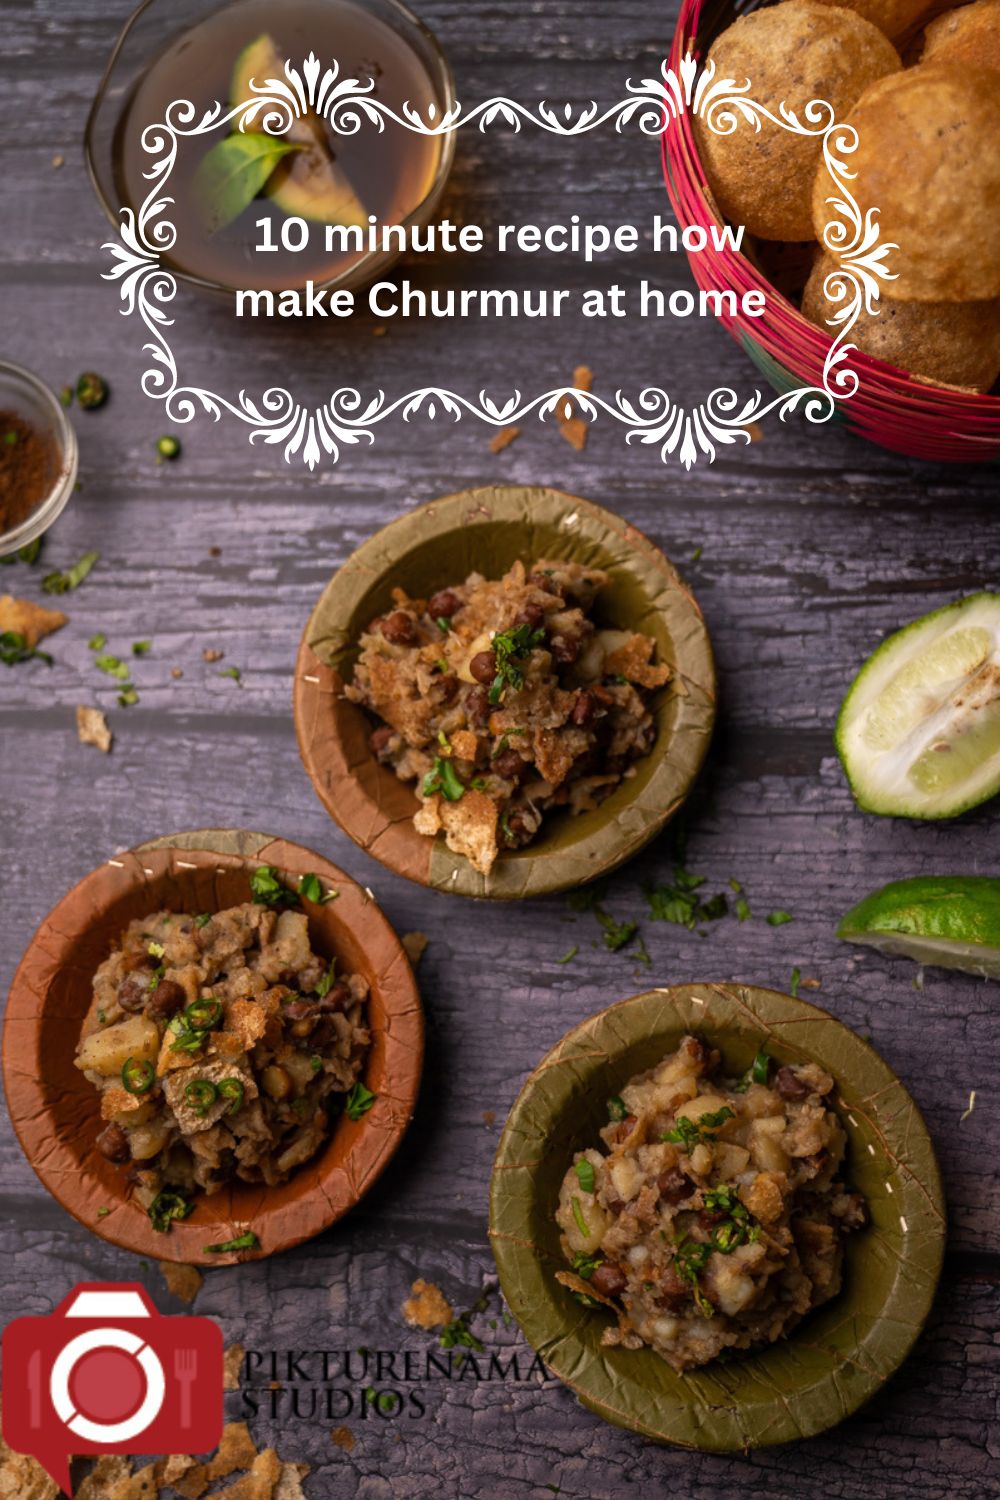 How to make churmur at home - 3 